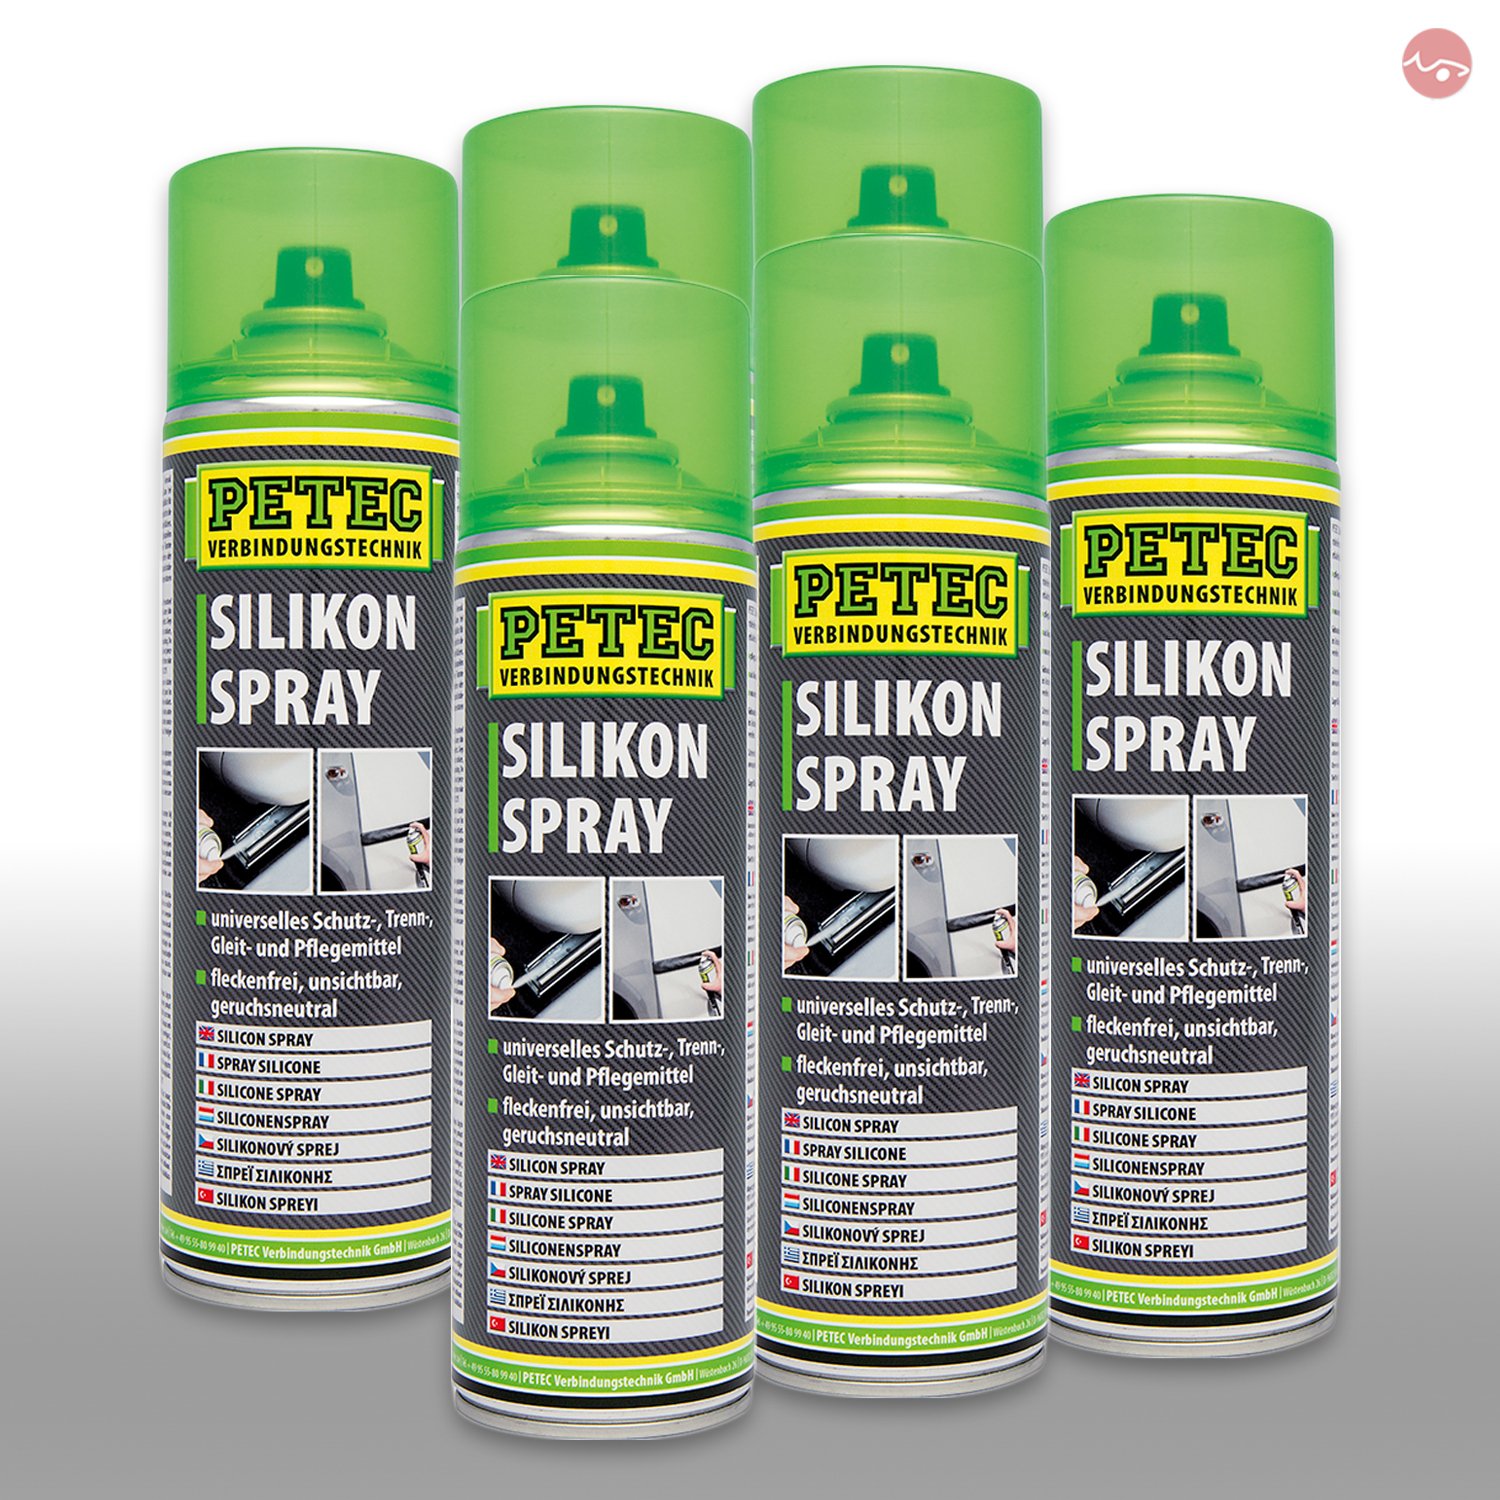 Petec_bundle 6X PETEC SILKIONSPRAY Silicon Spray Trennmittel Kunststoffpflege 500 ML 70850 von Petec_bundle